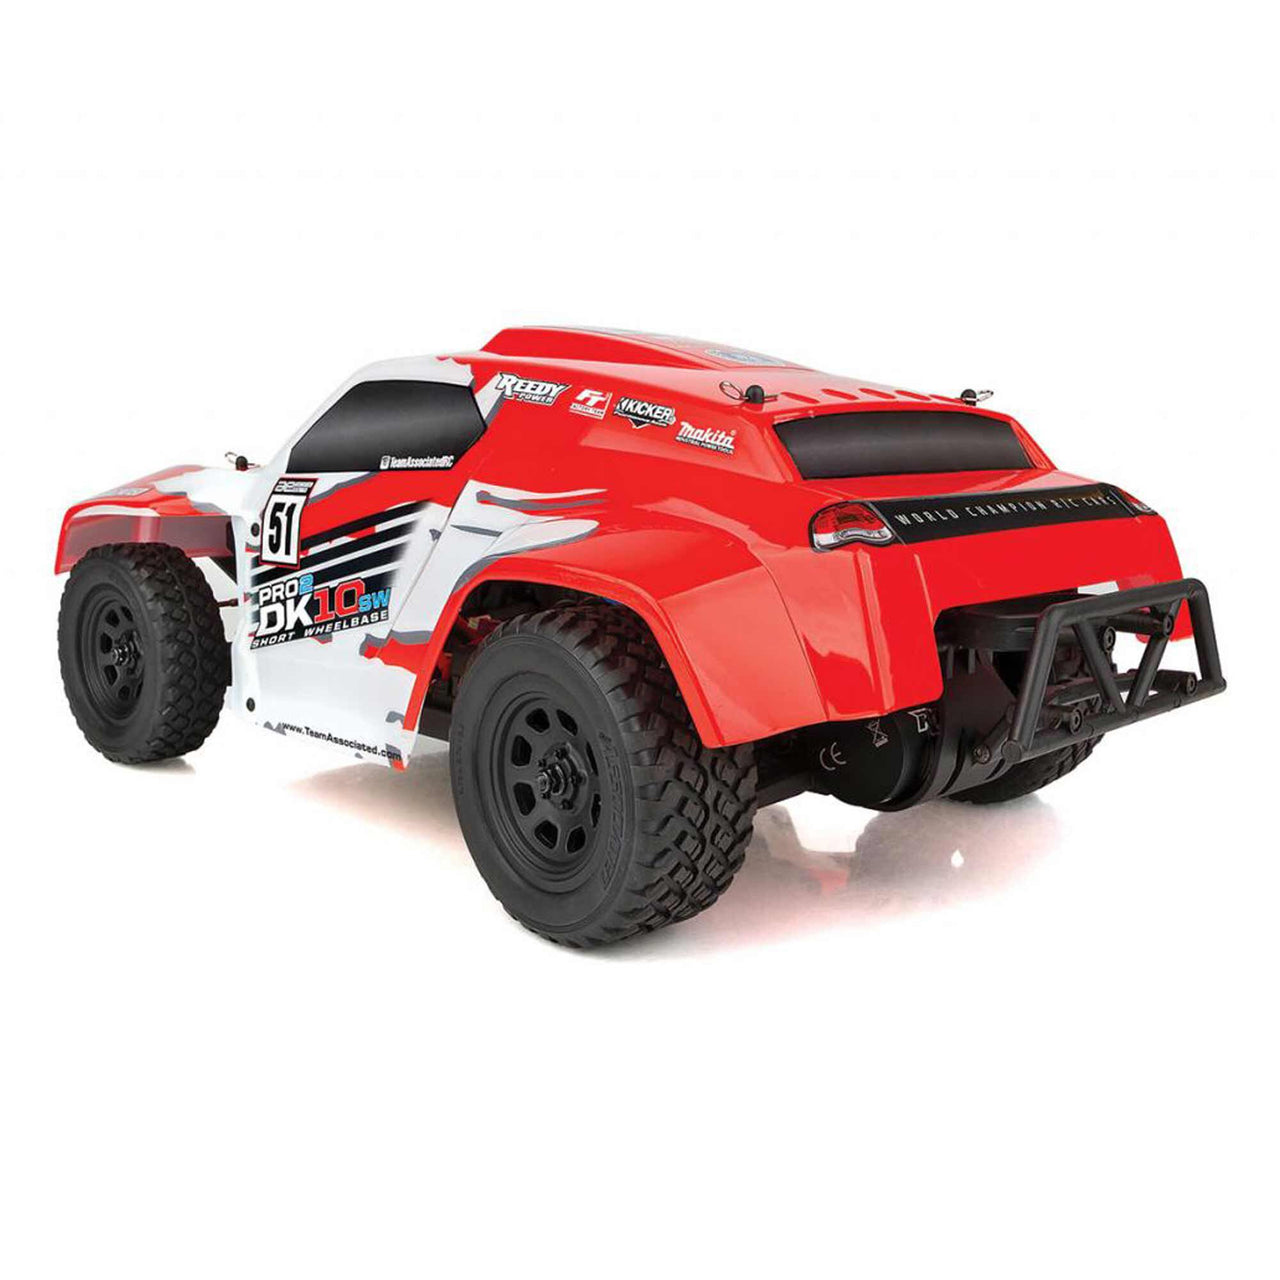 ASC90039 1/10 Pro2 DK10SW Dakar 2WD Buggy RTR, Red/White